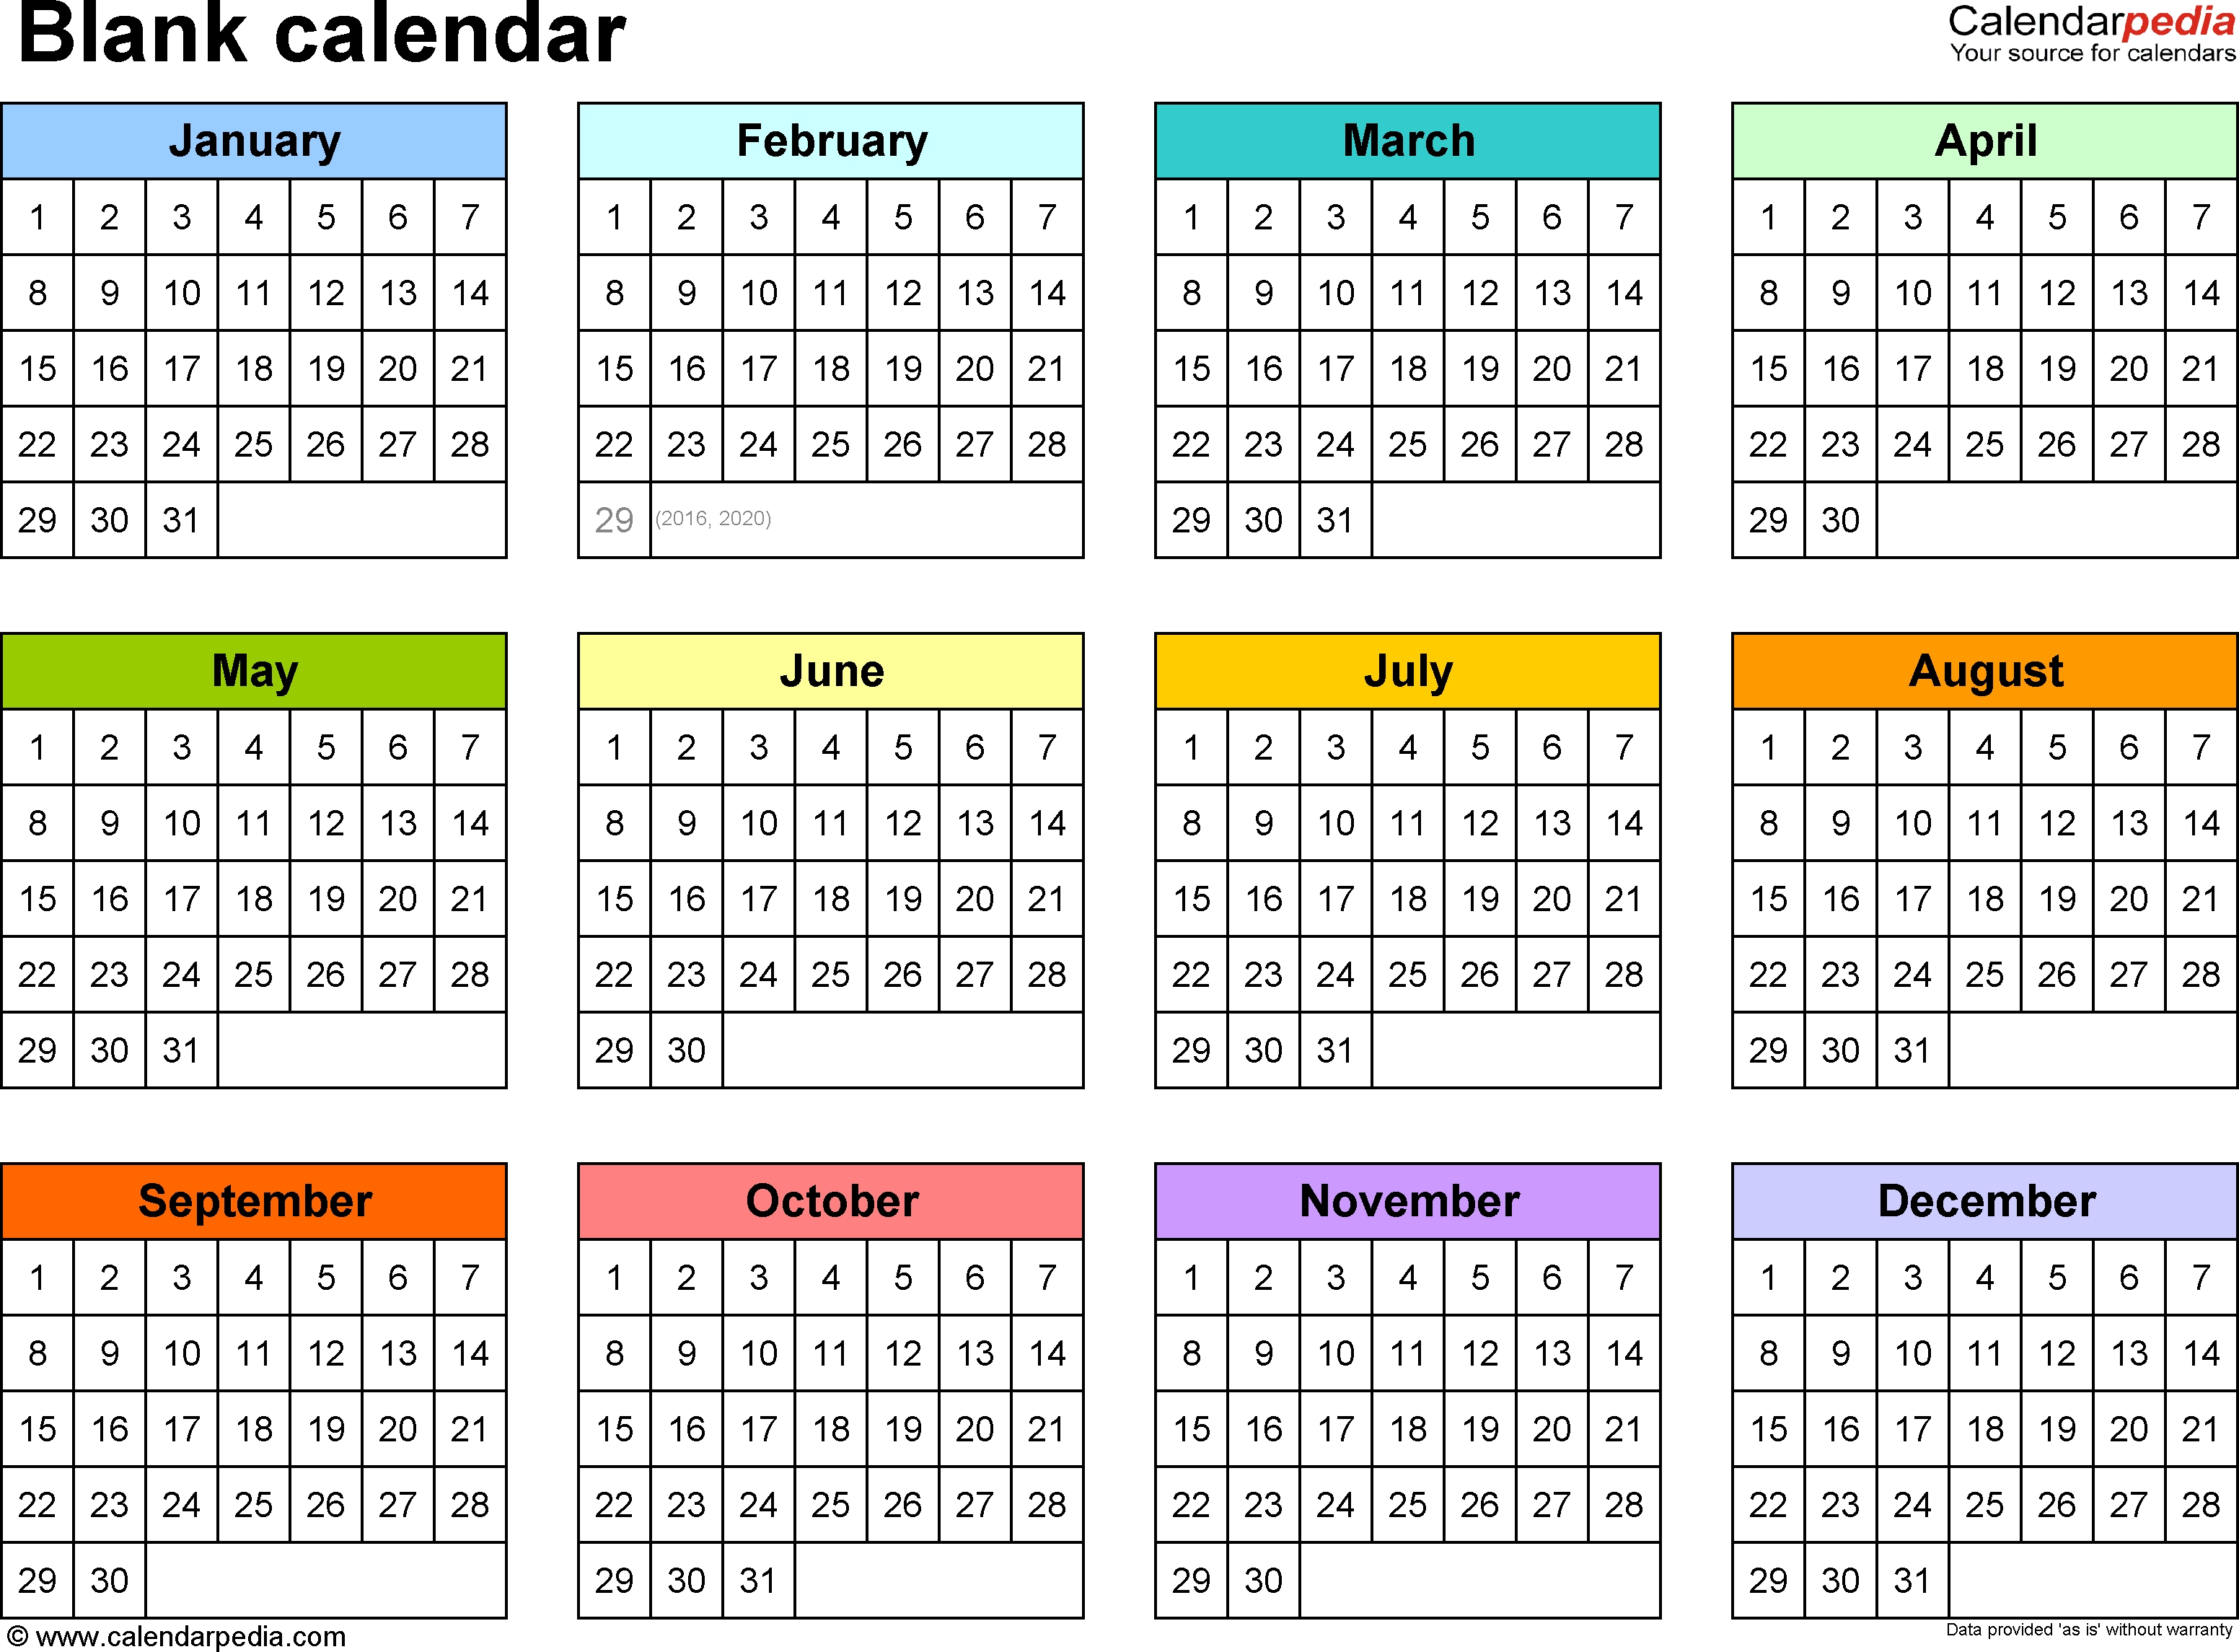 Blank Calendar - 9 Free Printable Microsoft Word Templates 1 Page Blank Calendar